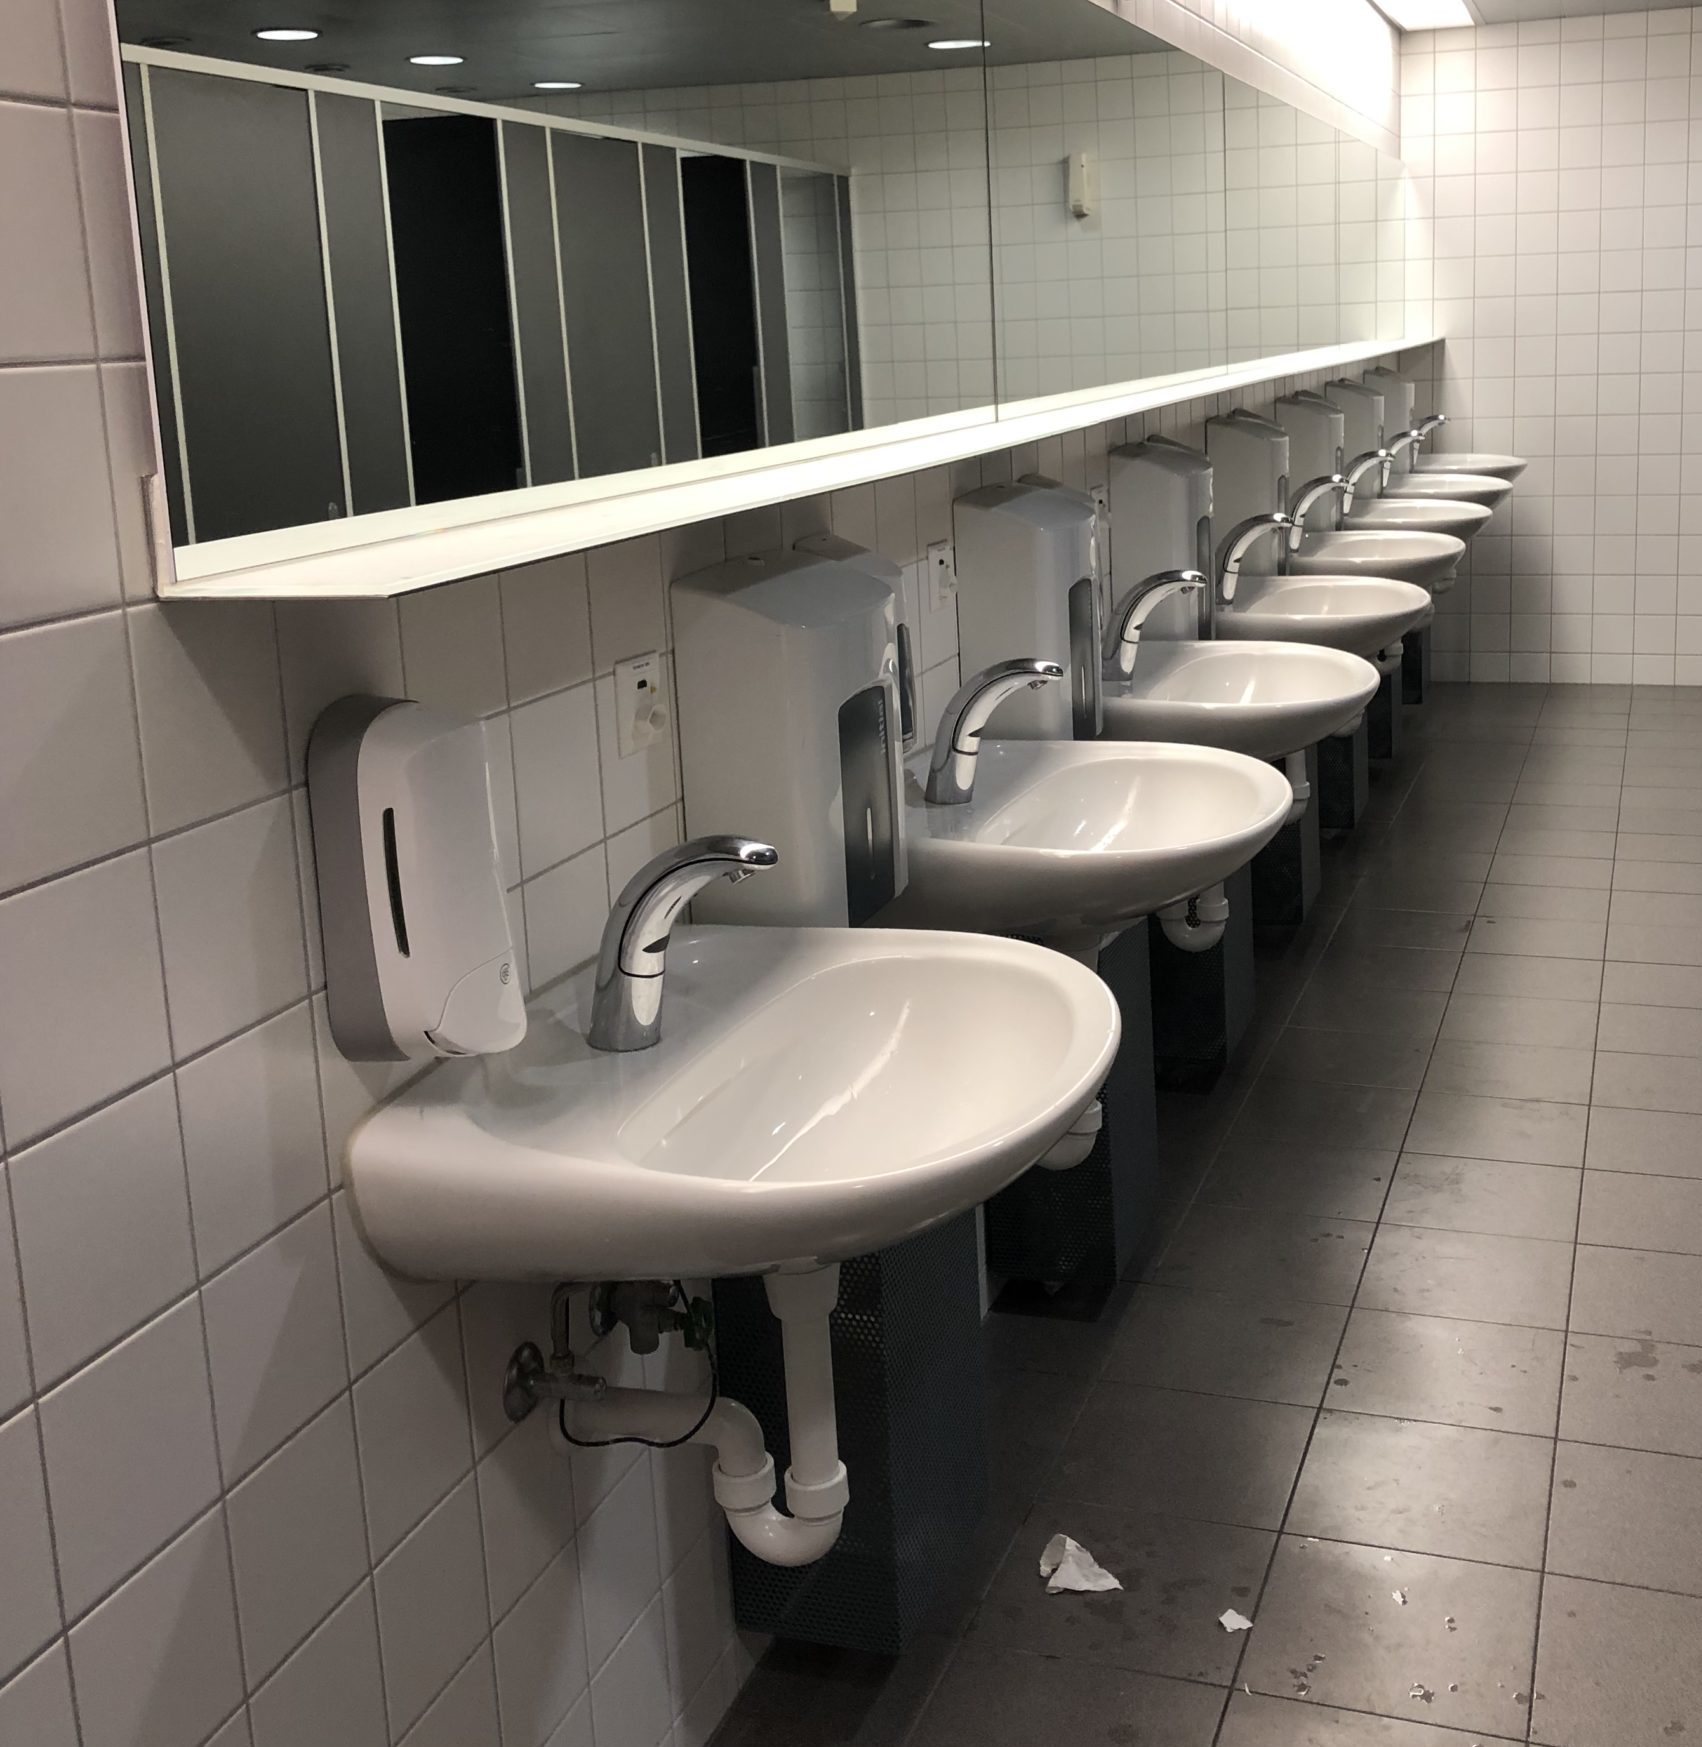 Row of sinks in airport washroom